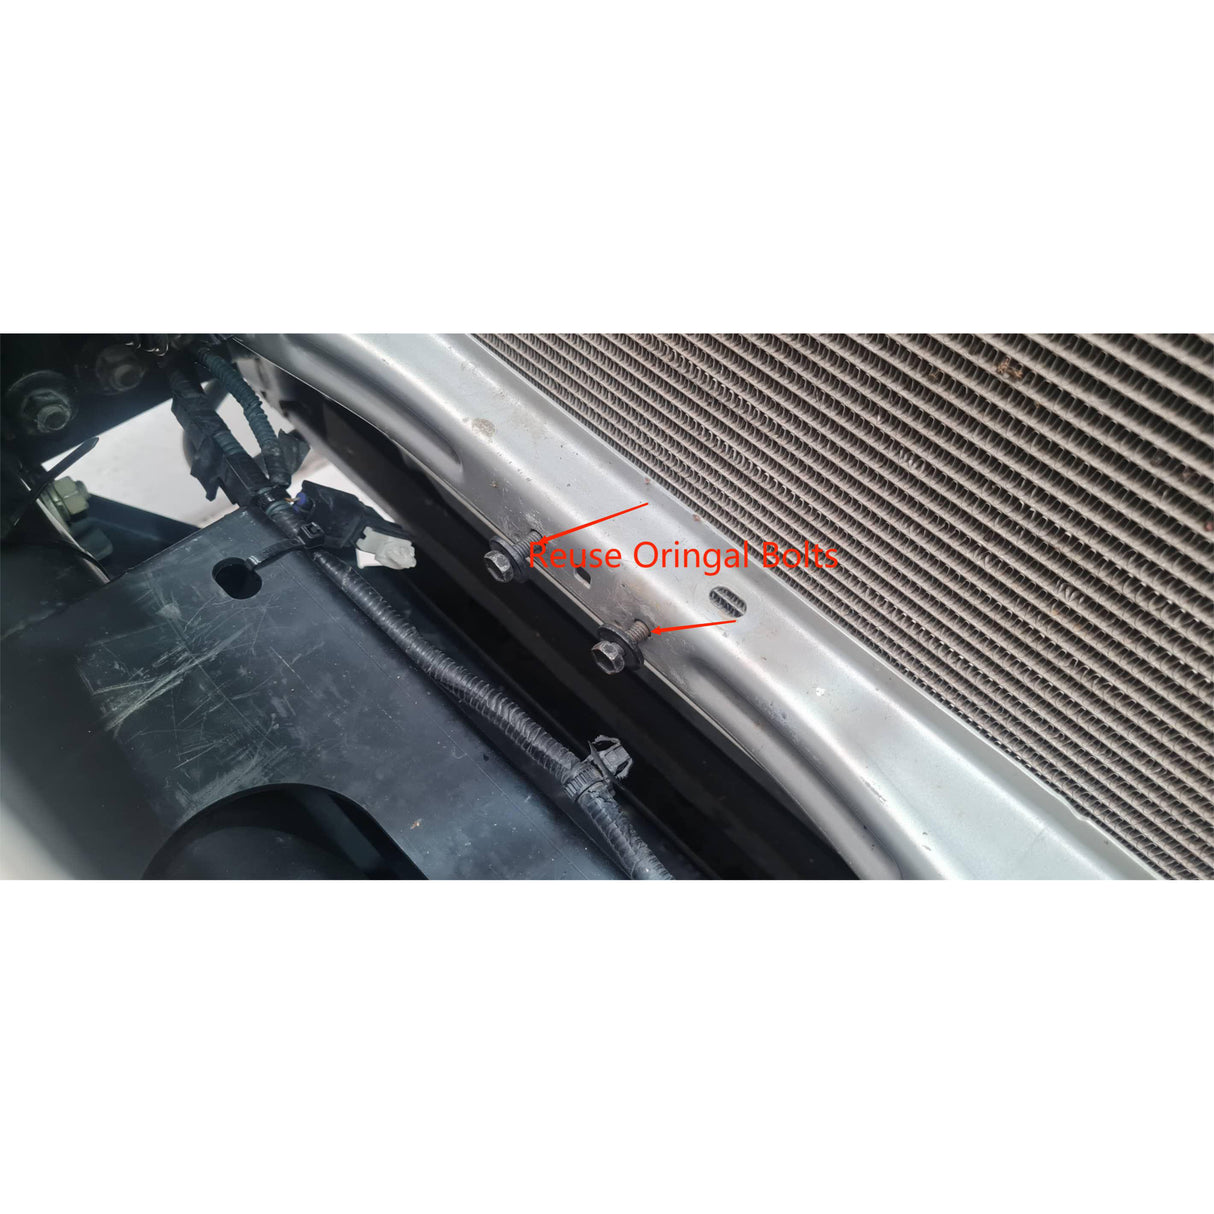 DPP 300HP Front Mount Intercooler Kit For Toyota Hilux 1KD FTV 3.0L